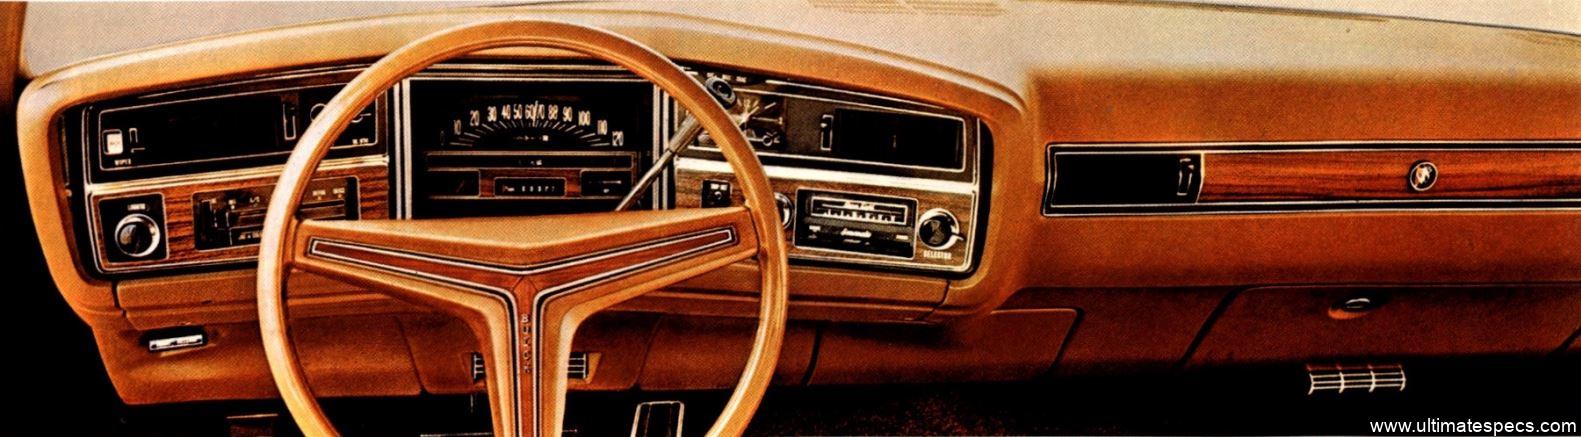 Buick Centurion Convertible 1972